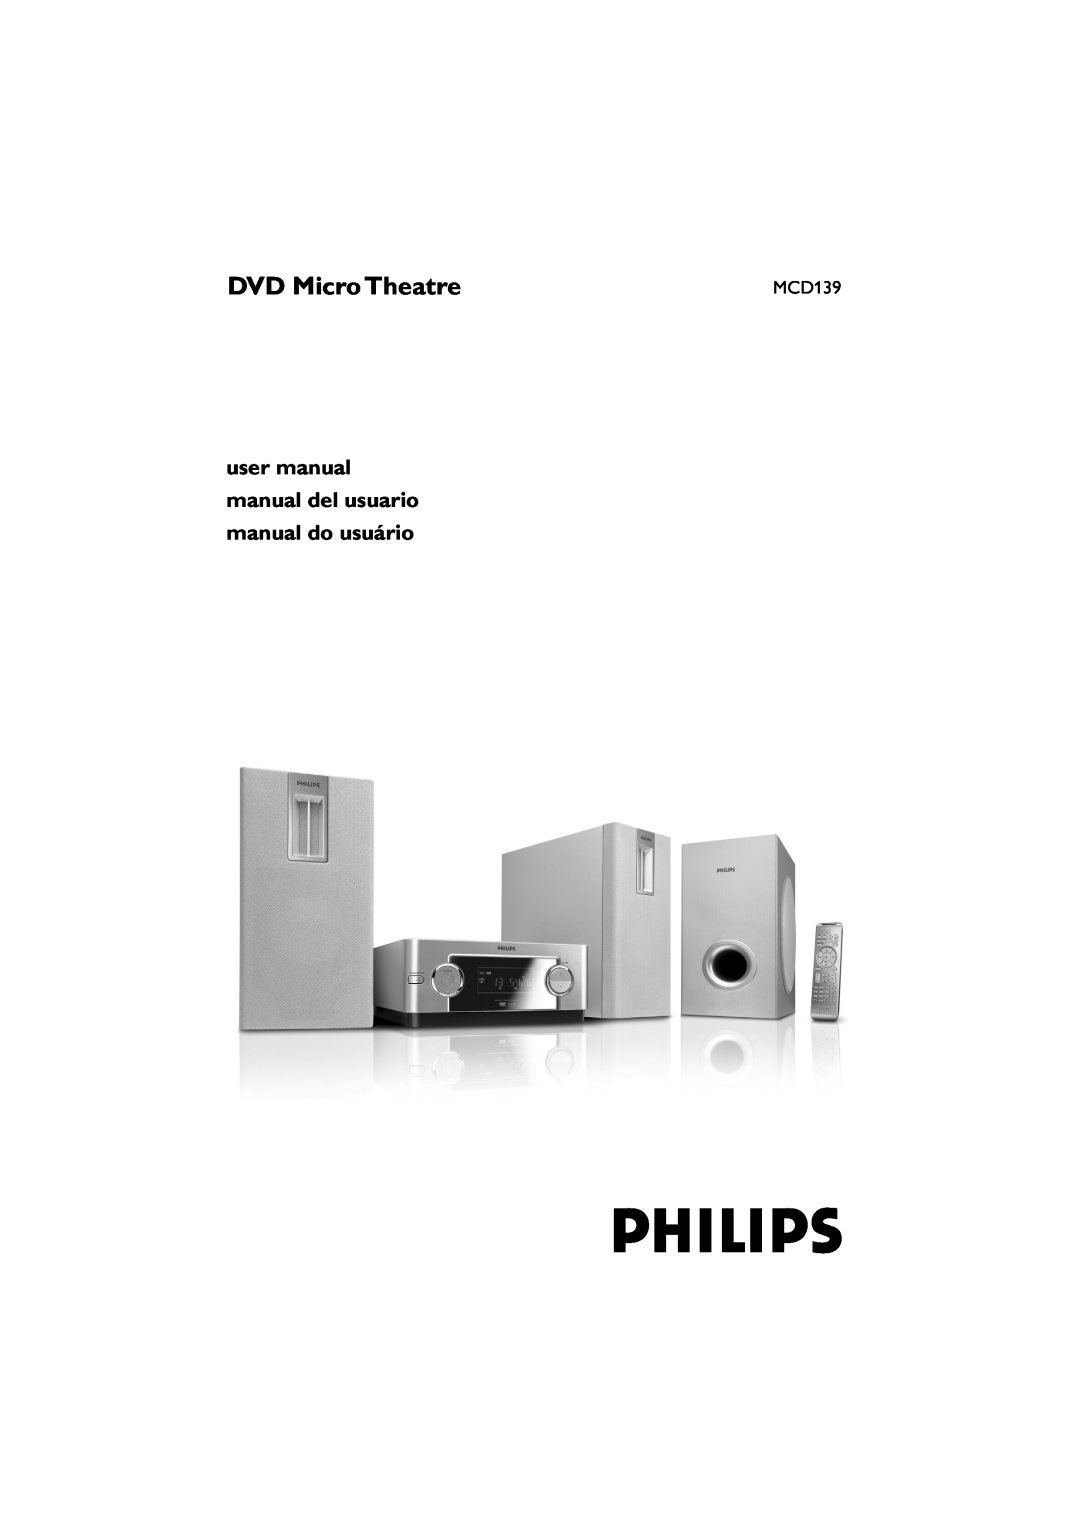 Philips MCD139 user manual DVD Micro Theatre 